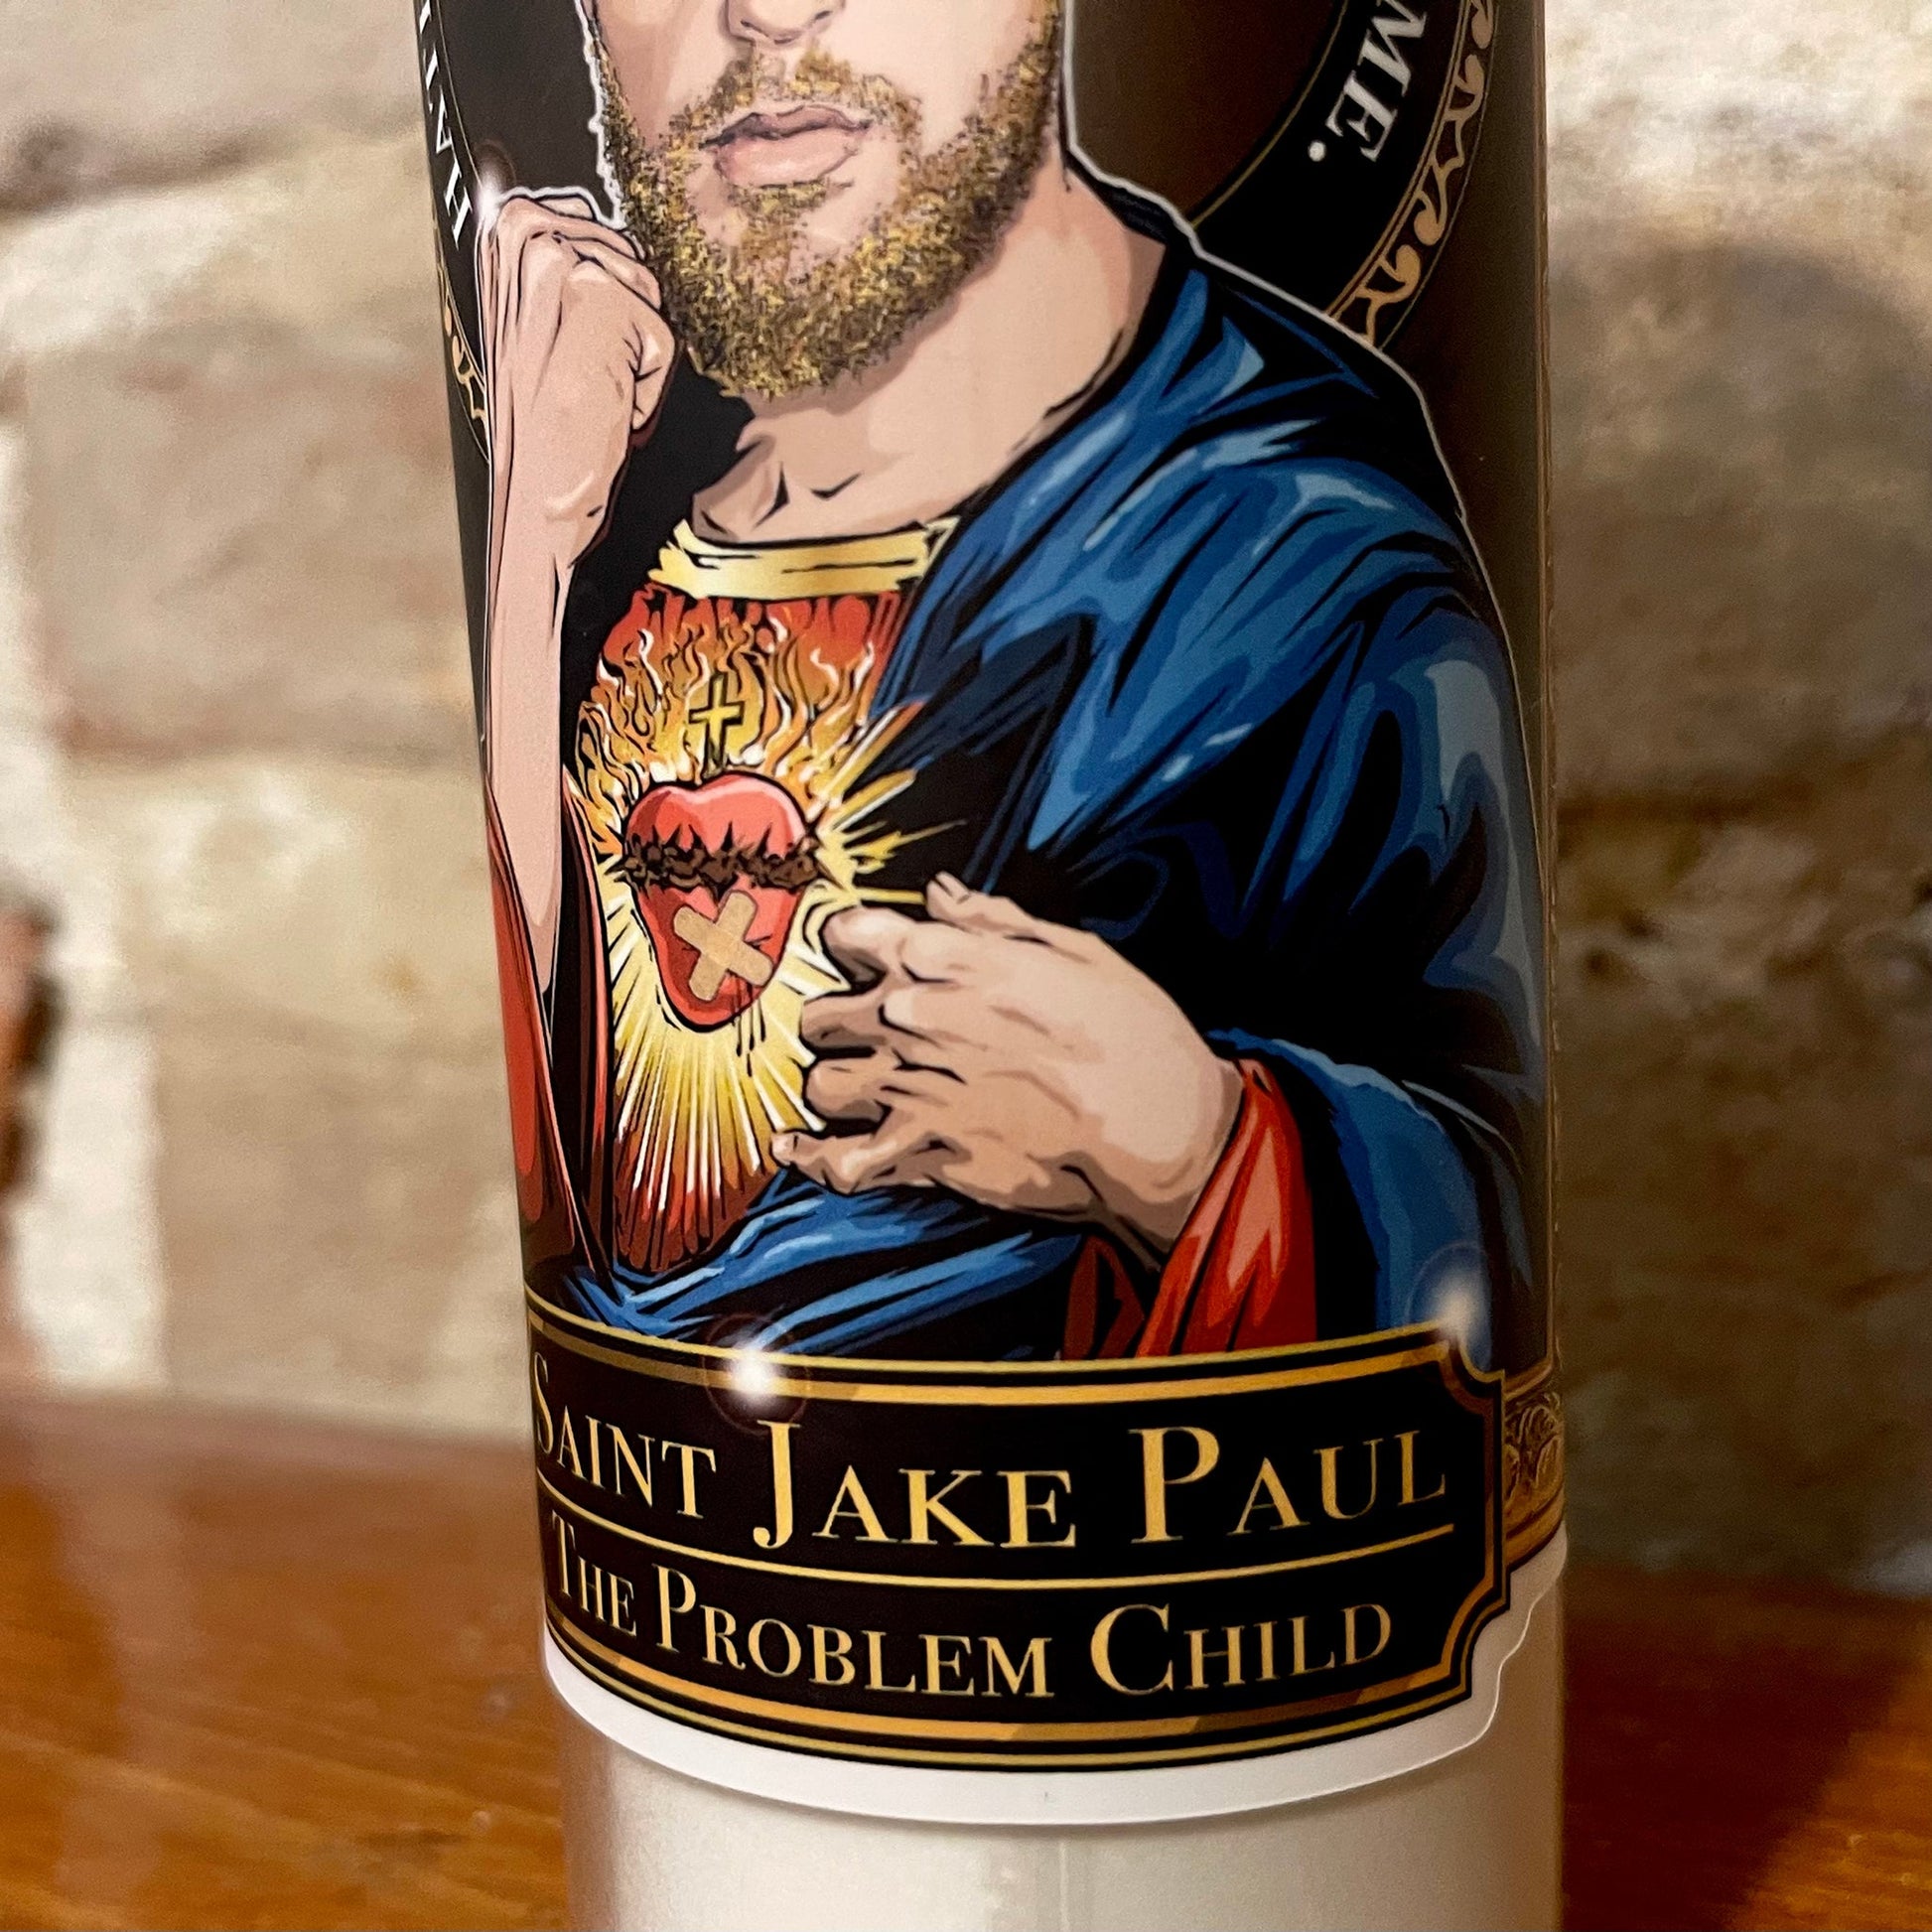 Saint Jake Paul The Problem Child Candle Cleaverandblade.com